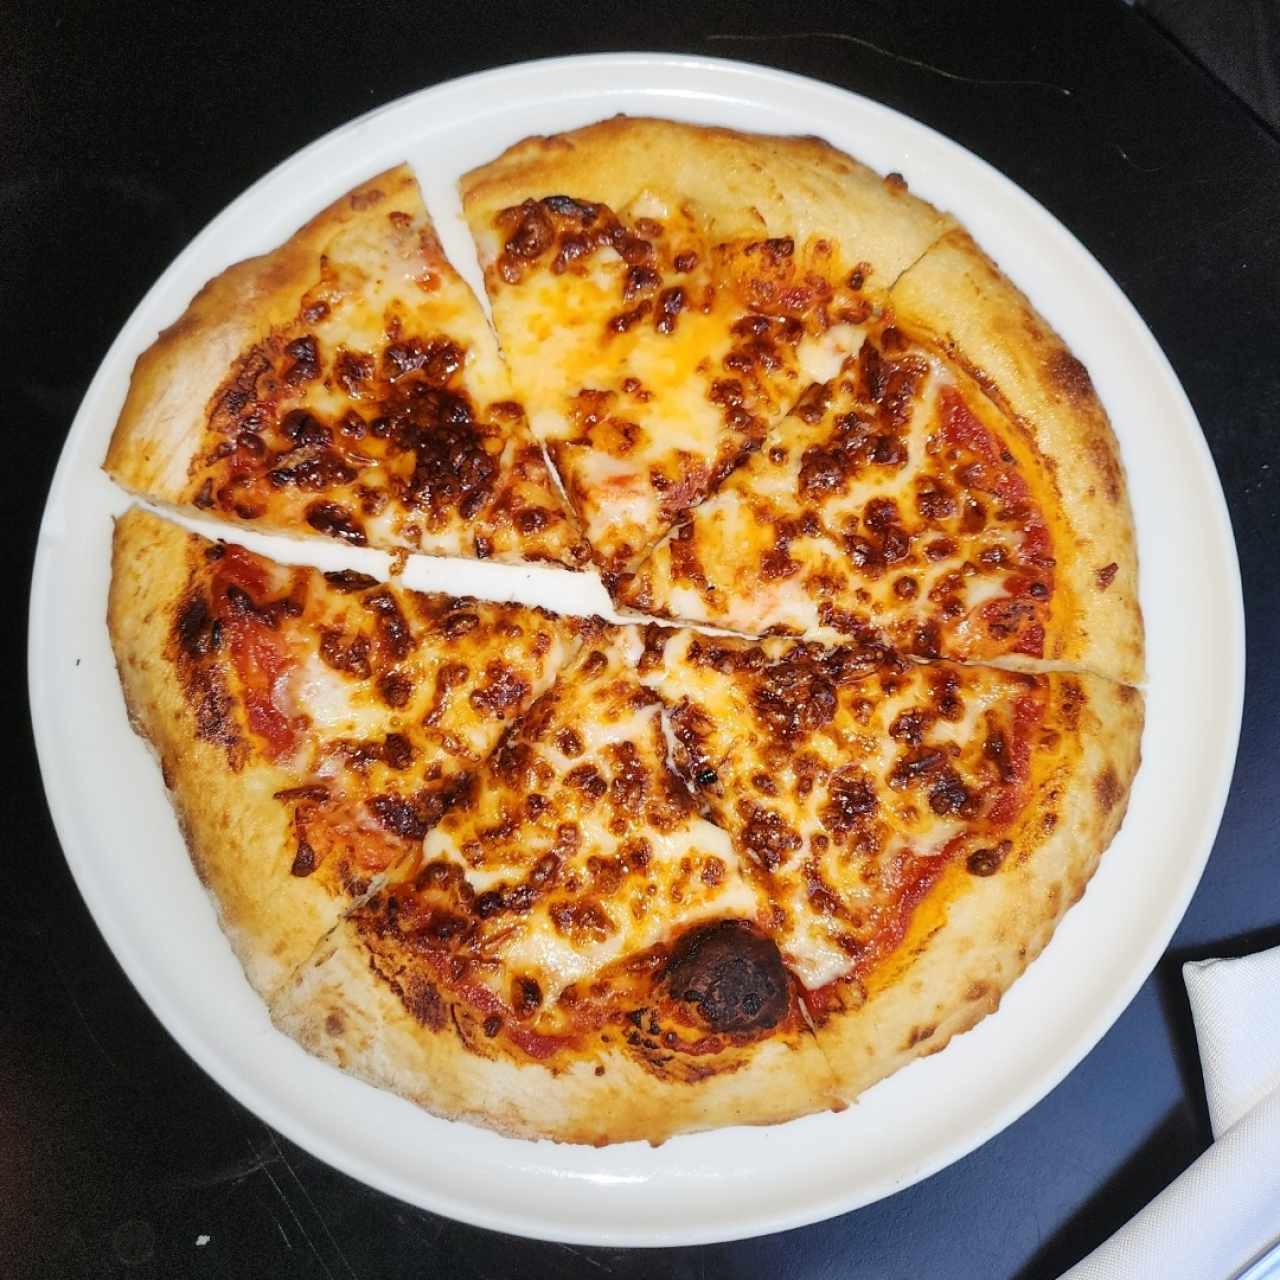 Pizza 12" - Pepperoni